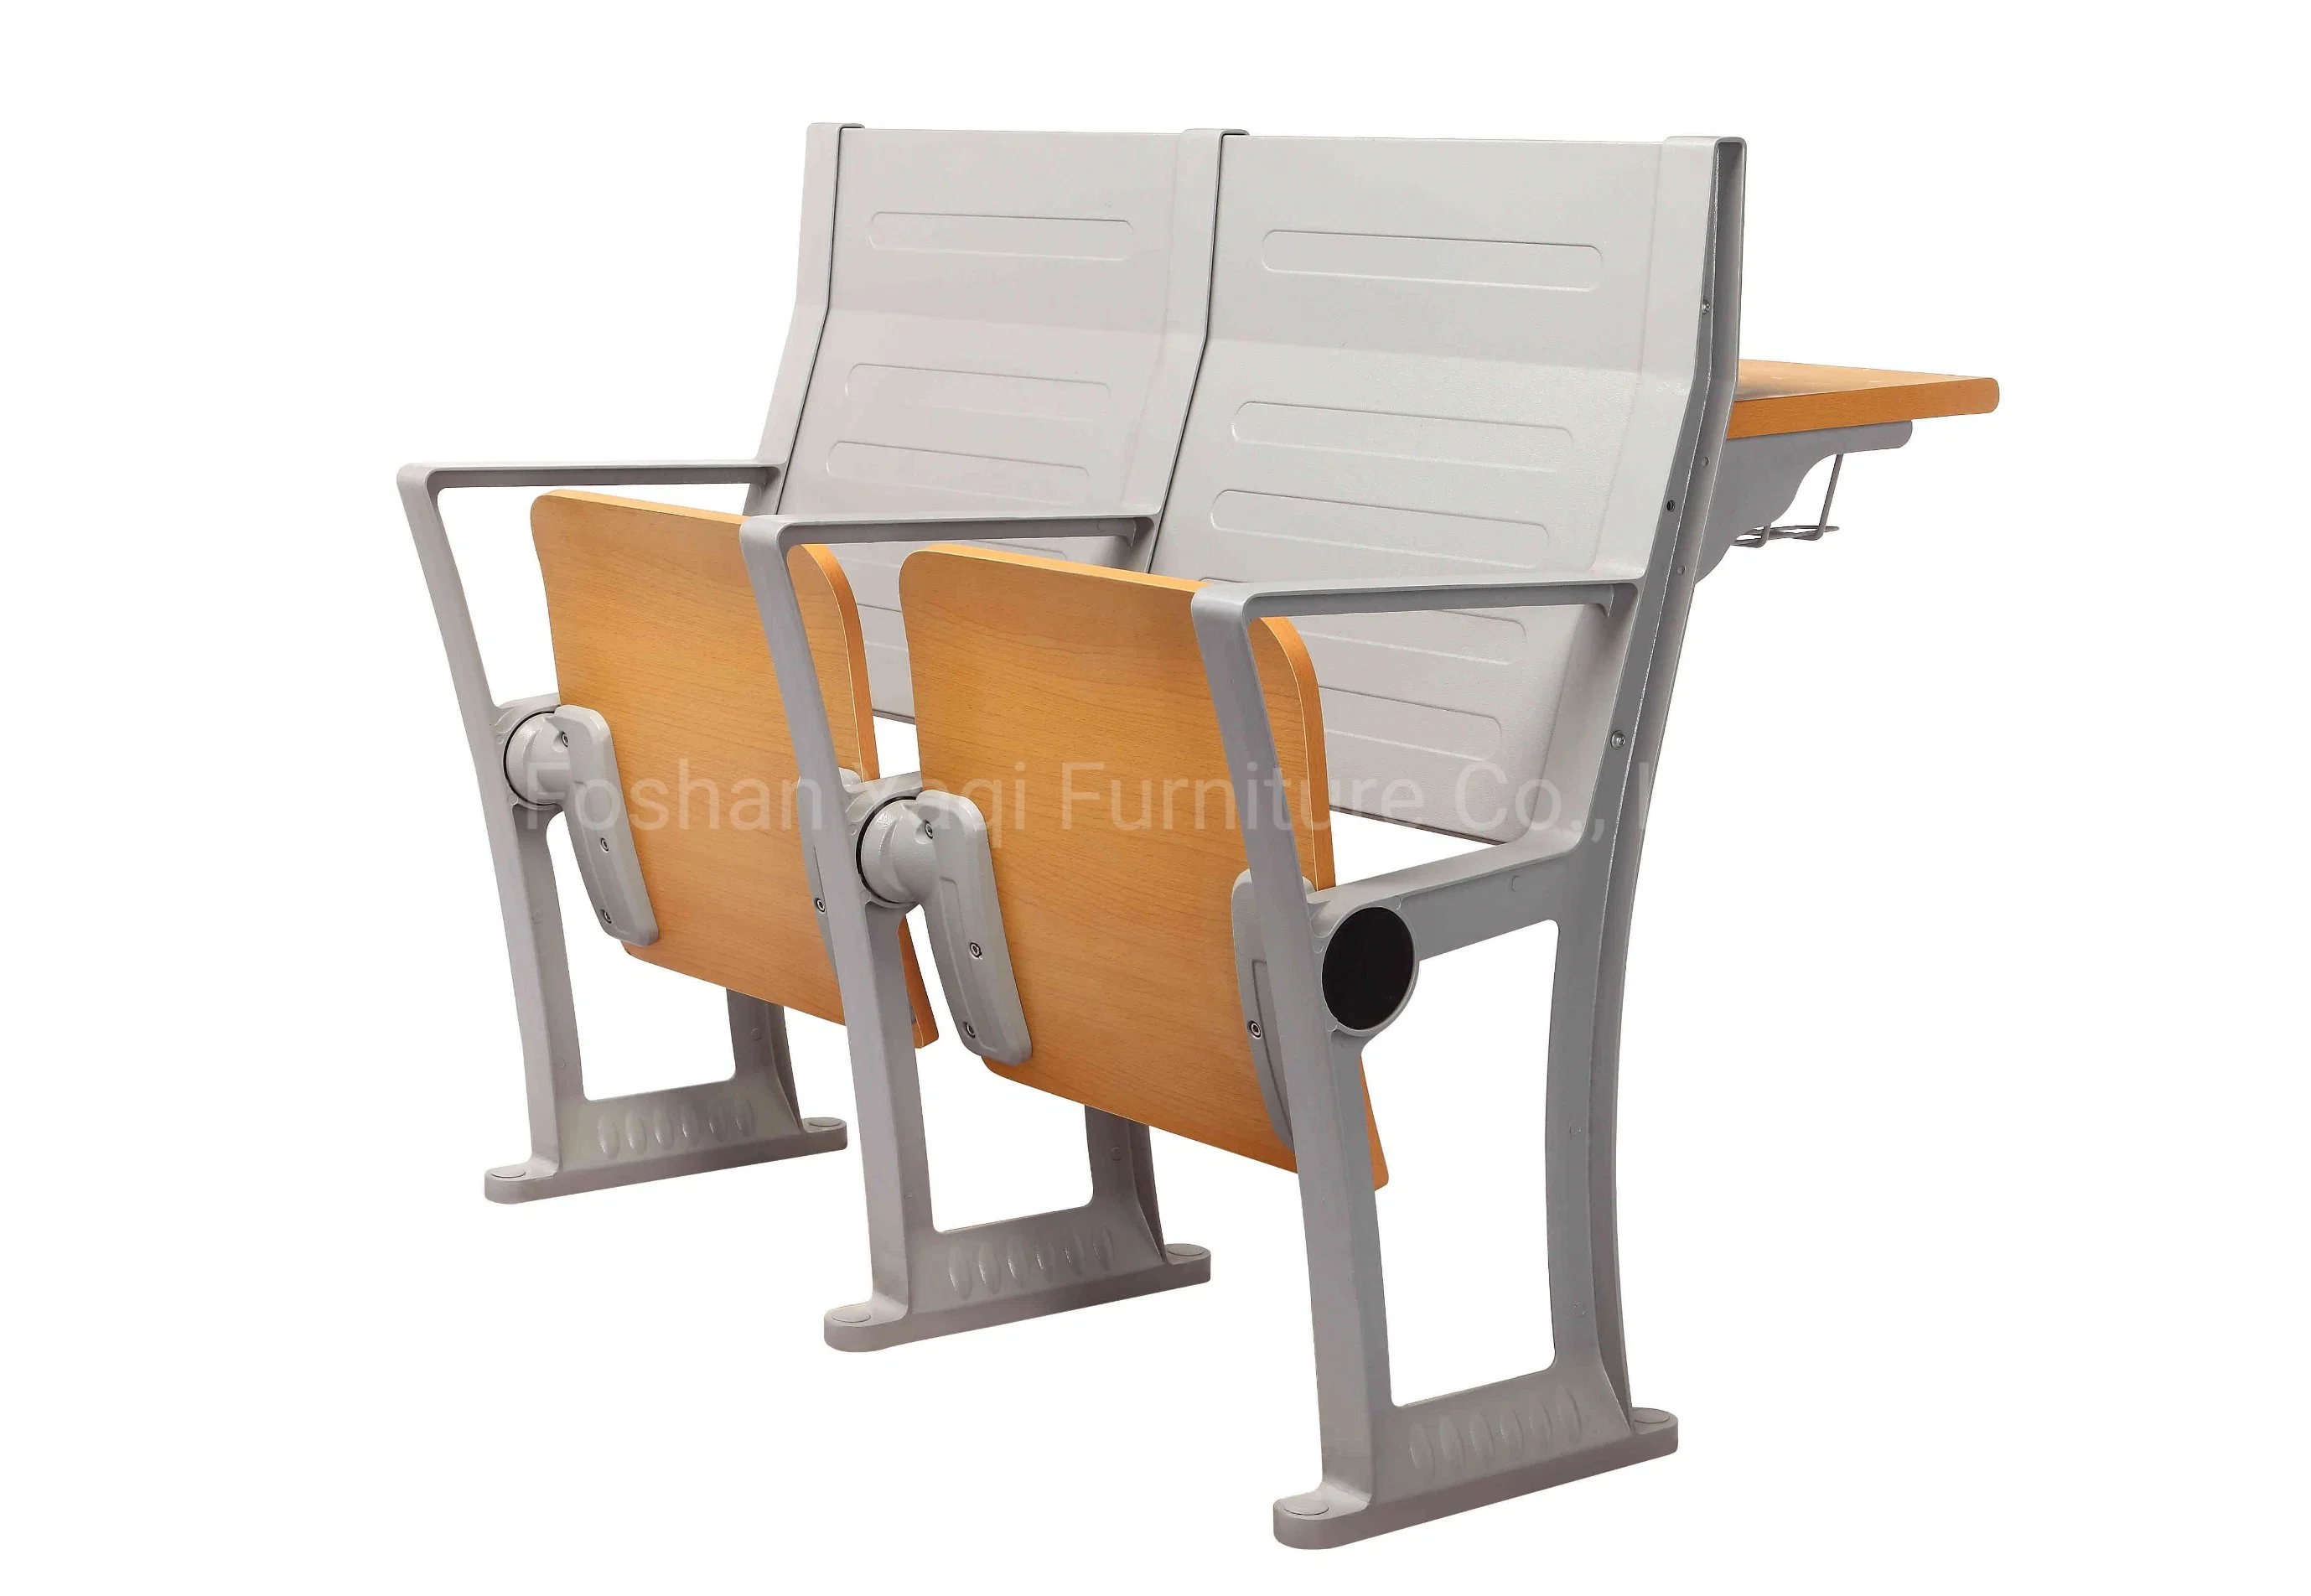 School Furniture Sale Classroom Furniture Suppliers Desk Chair School Furniture Chairs Student Desk (YA-X016C)